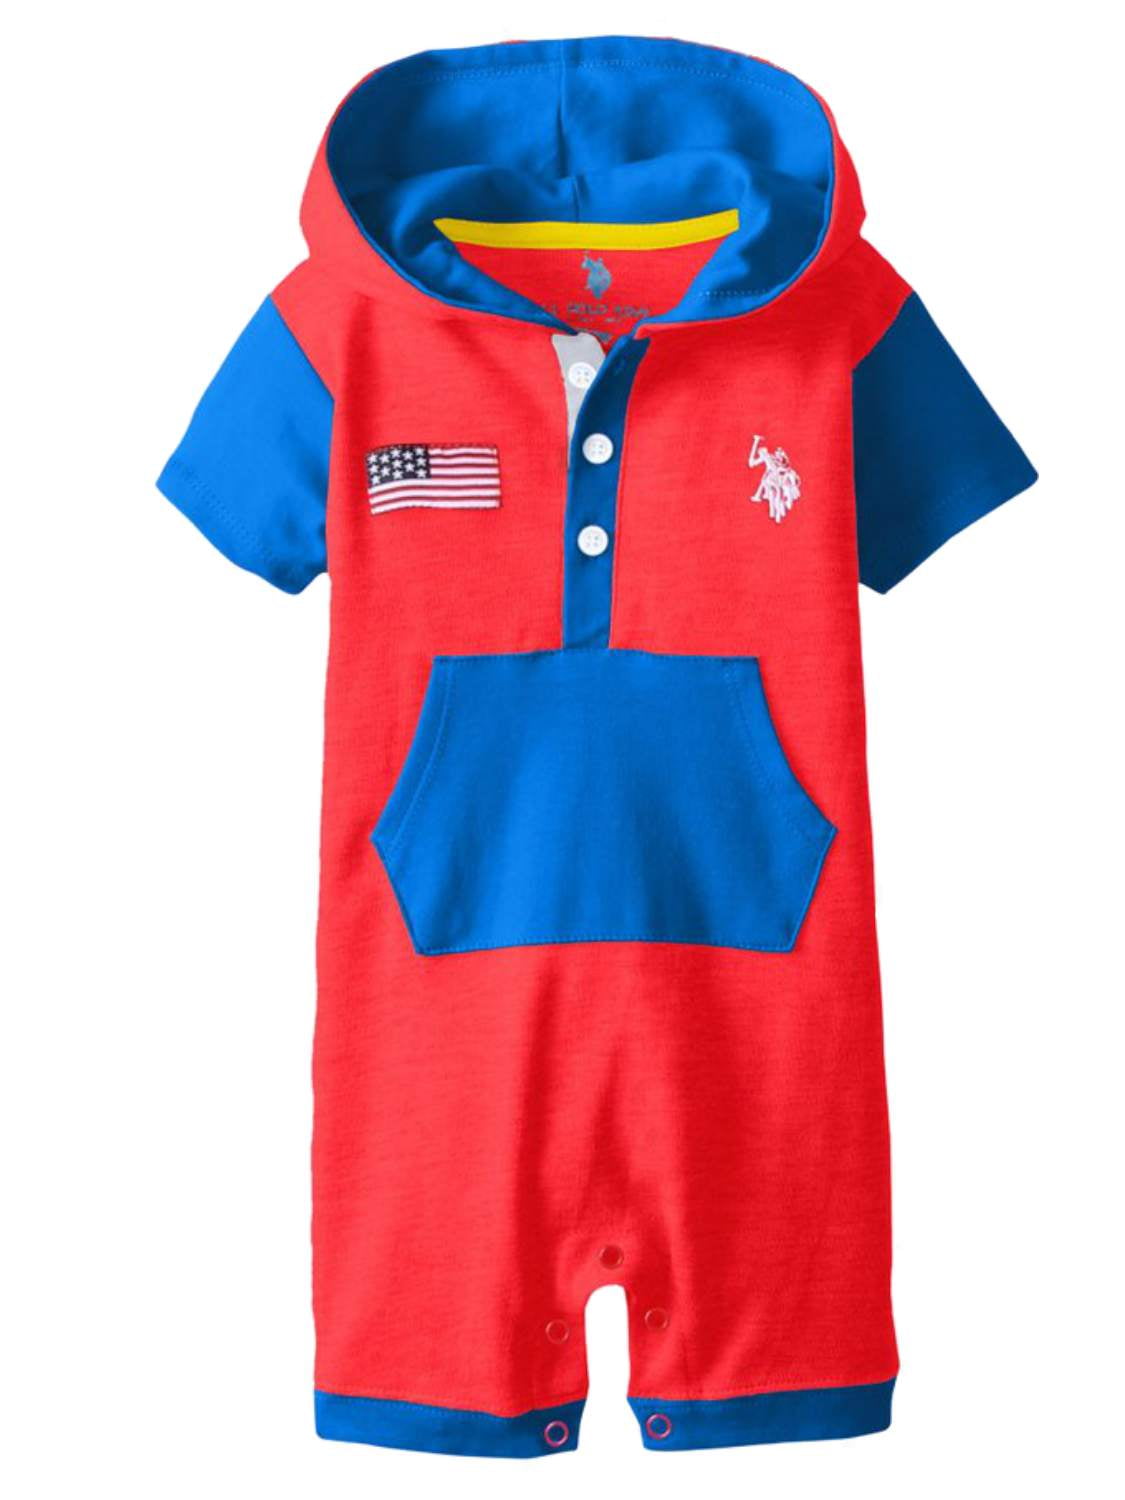 US Polo Assn Infant Boys L/S Heather Charcoal Romper Size 3/6M 6/9M $30 